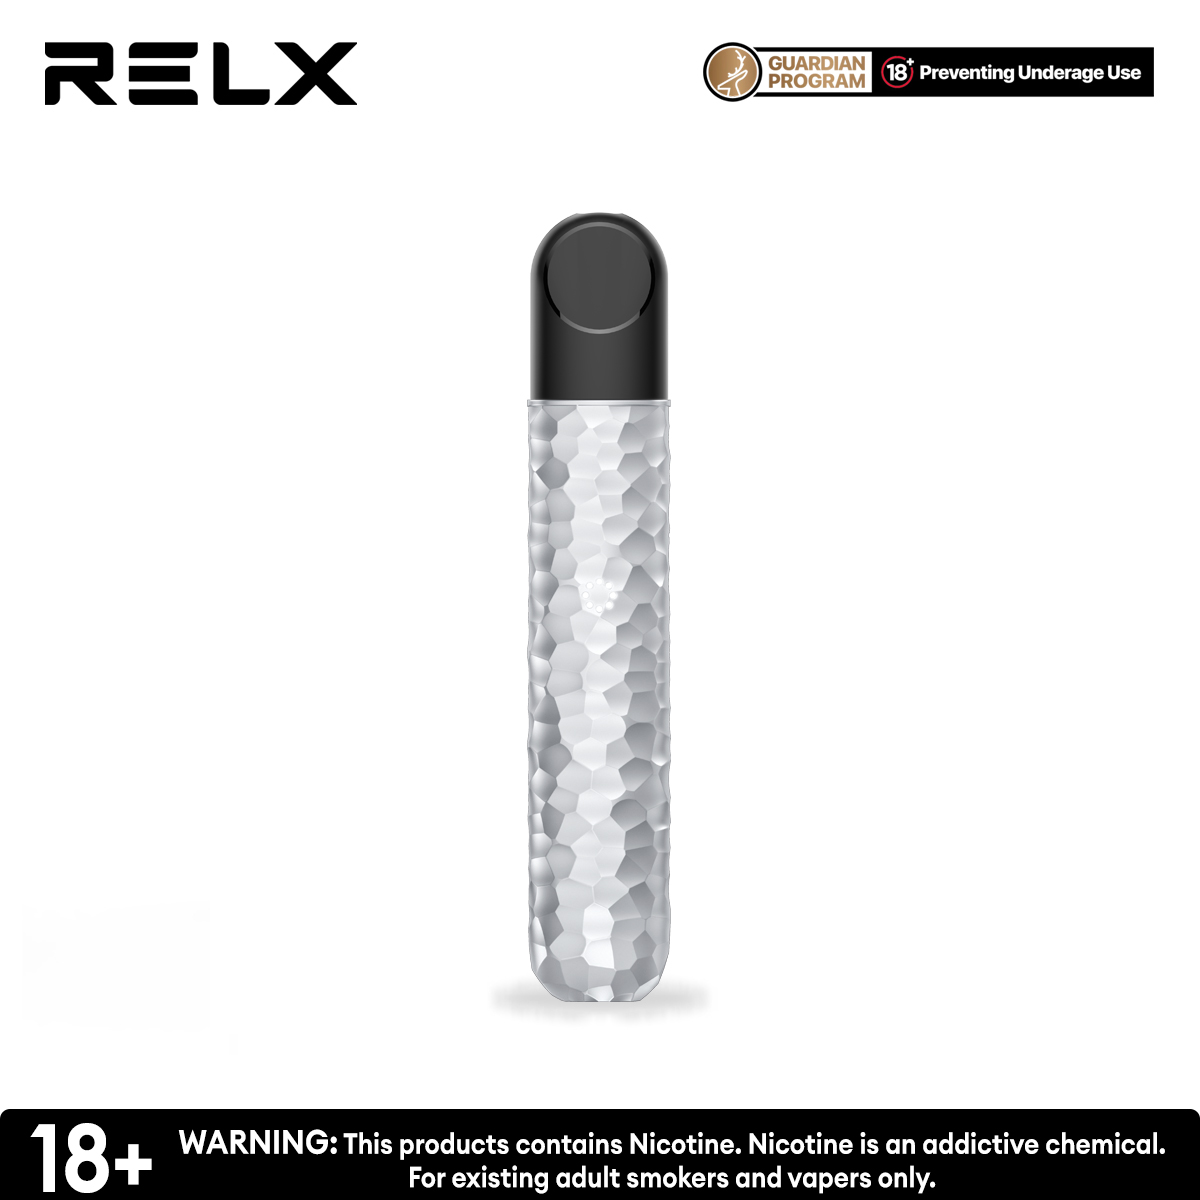 RELX Artisan Series: Hammered Steel – Alexa Philippines